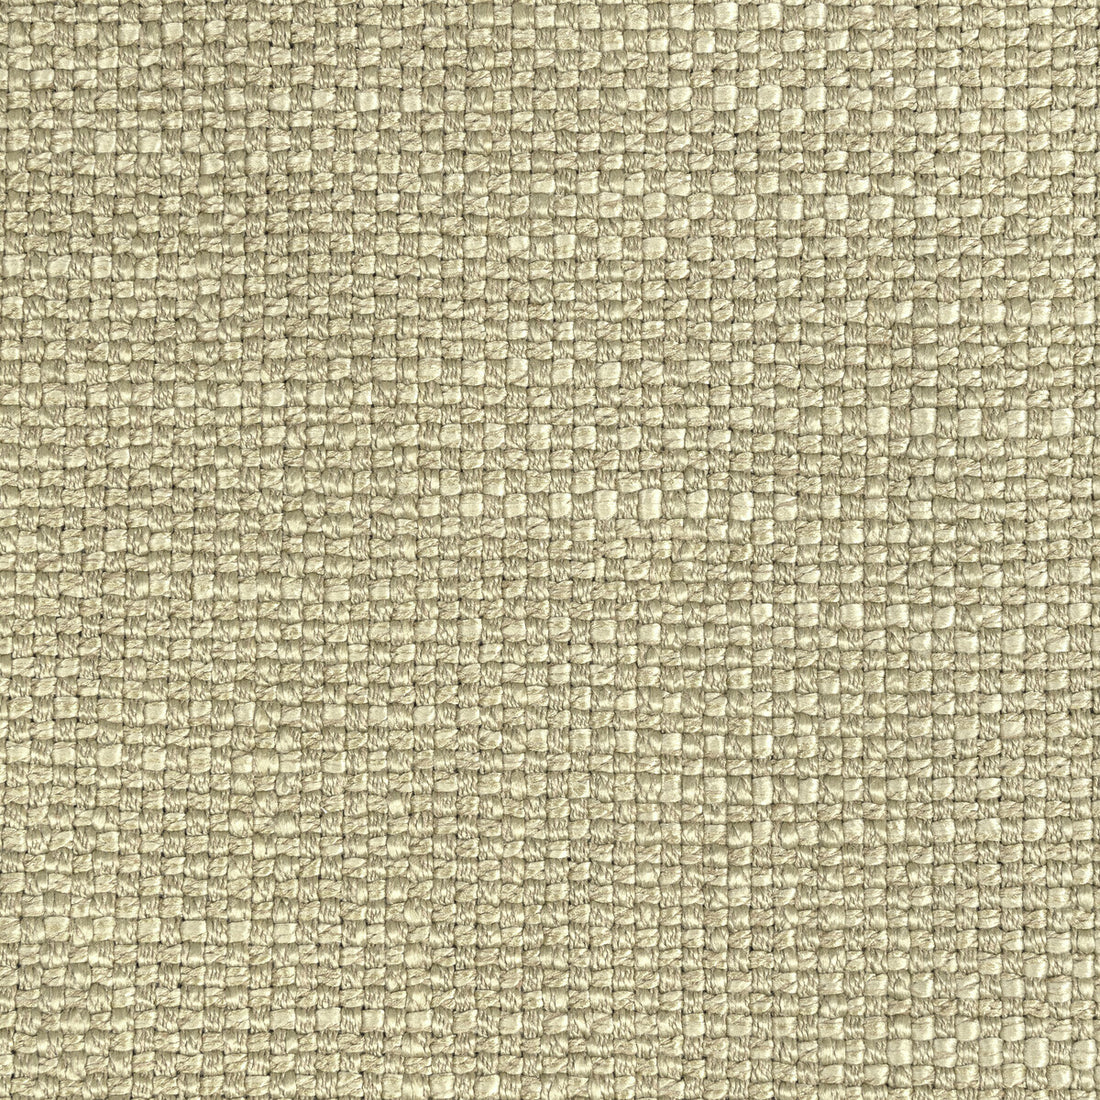 Kravet Design fabric in 36594-130 color - pattern 36594.130.0 - by Kravet Design in the Performance Kravetarmor collection